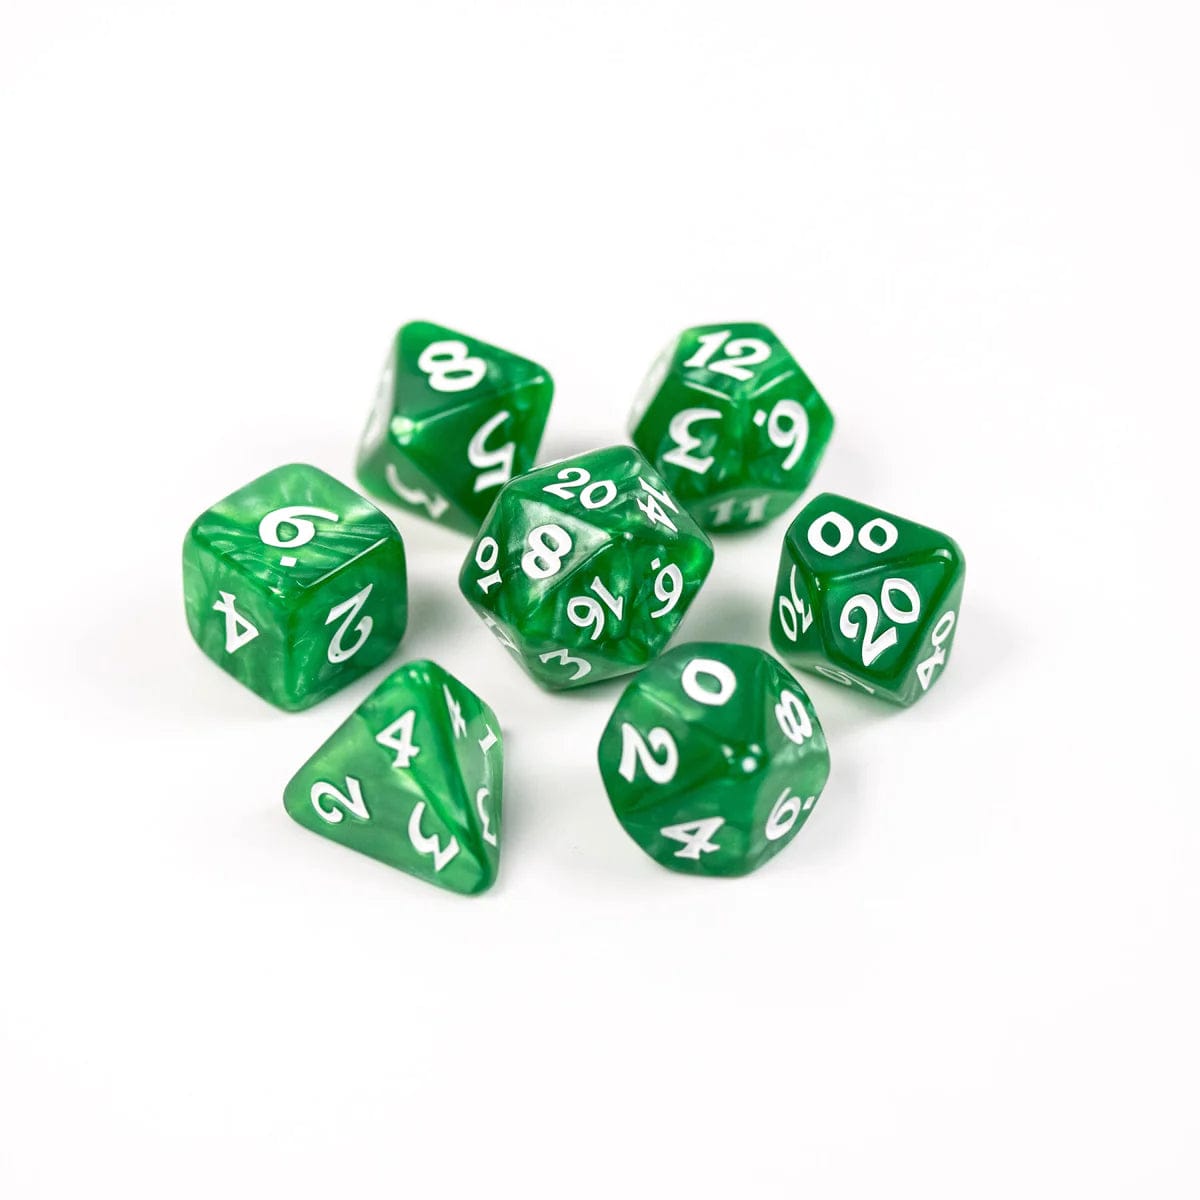 Die Hard Dice: 7pc RPG Set - Elessia Essentials, Green with White